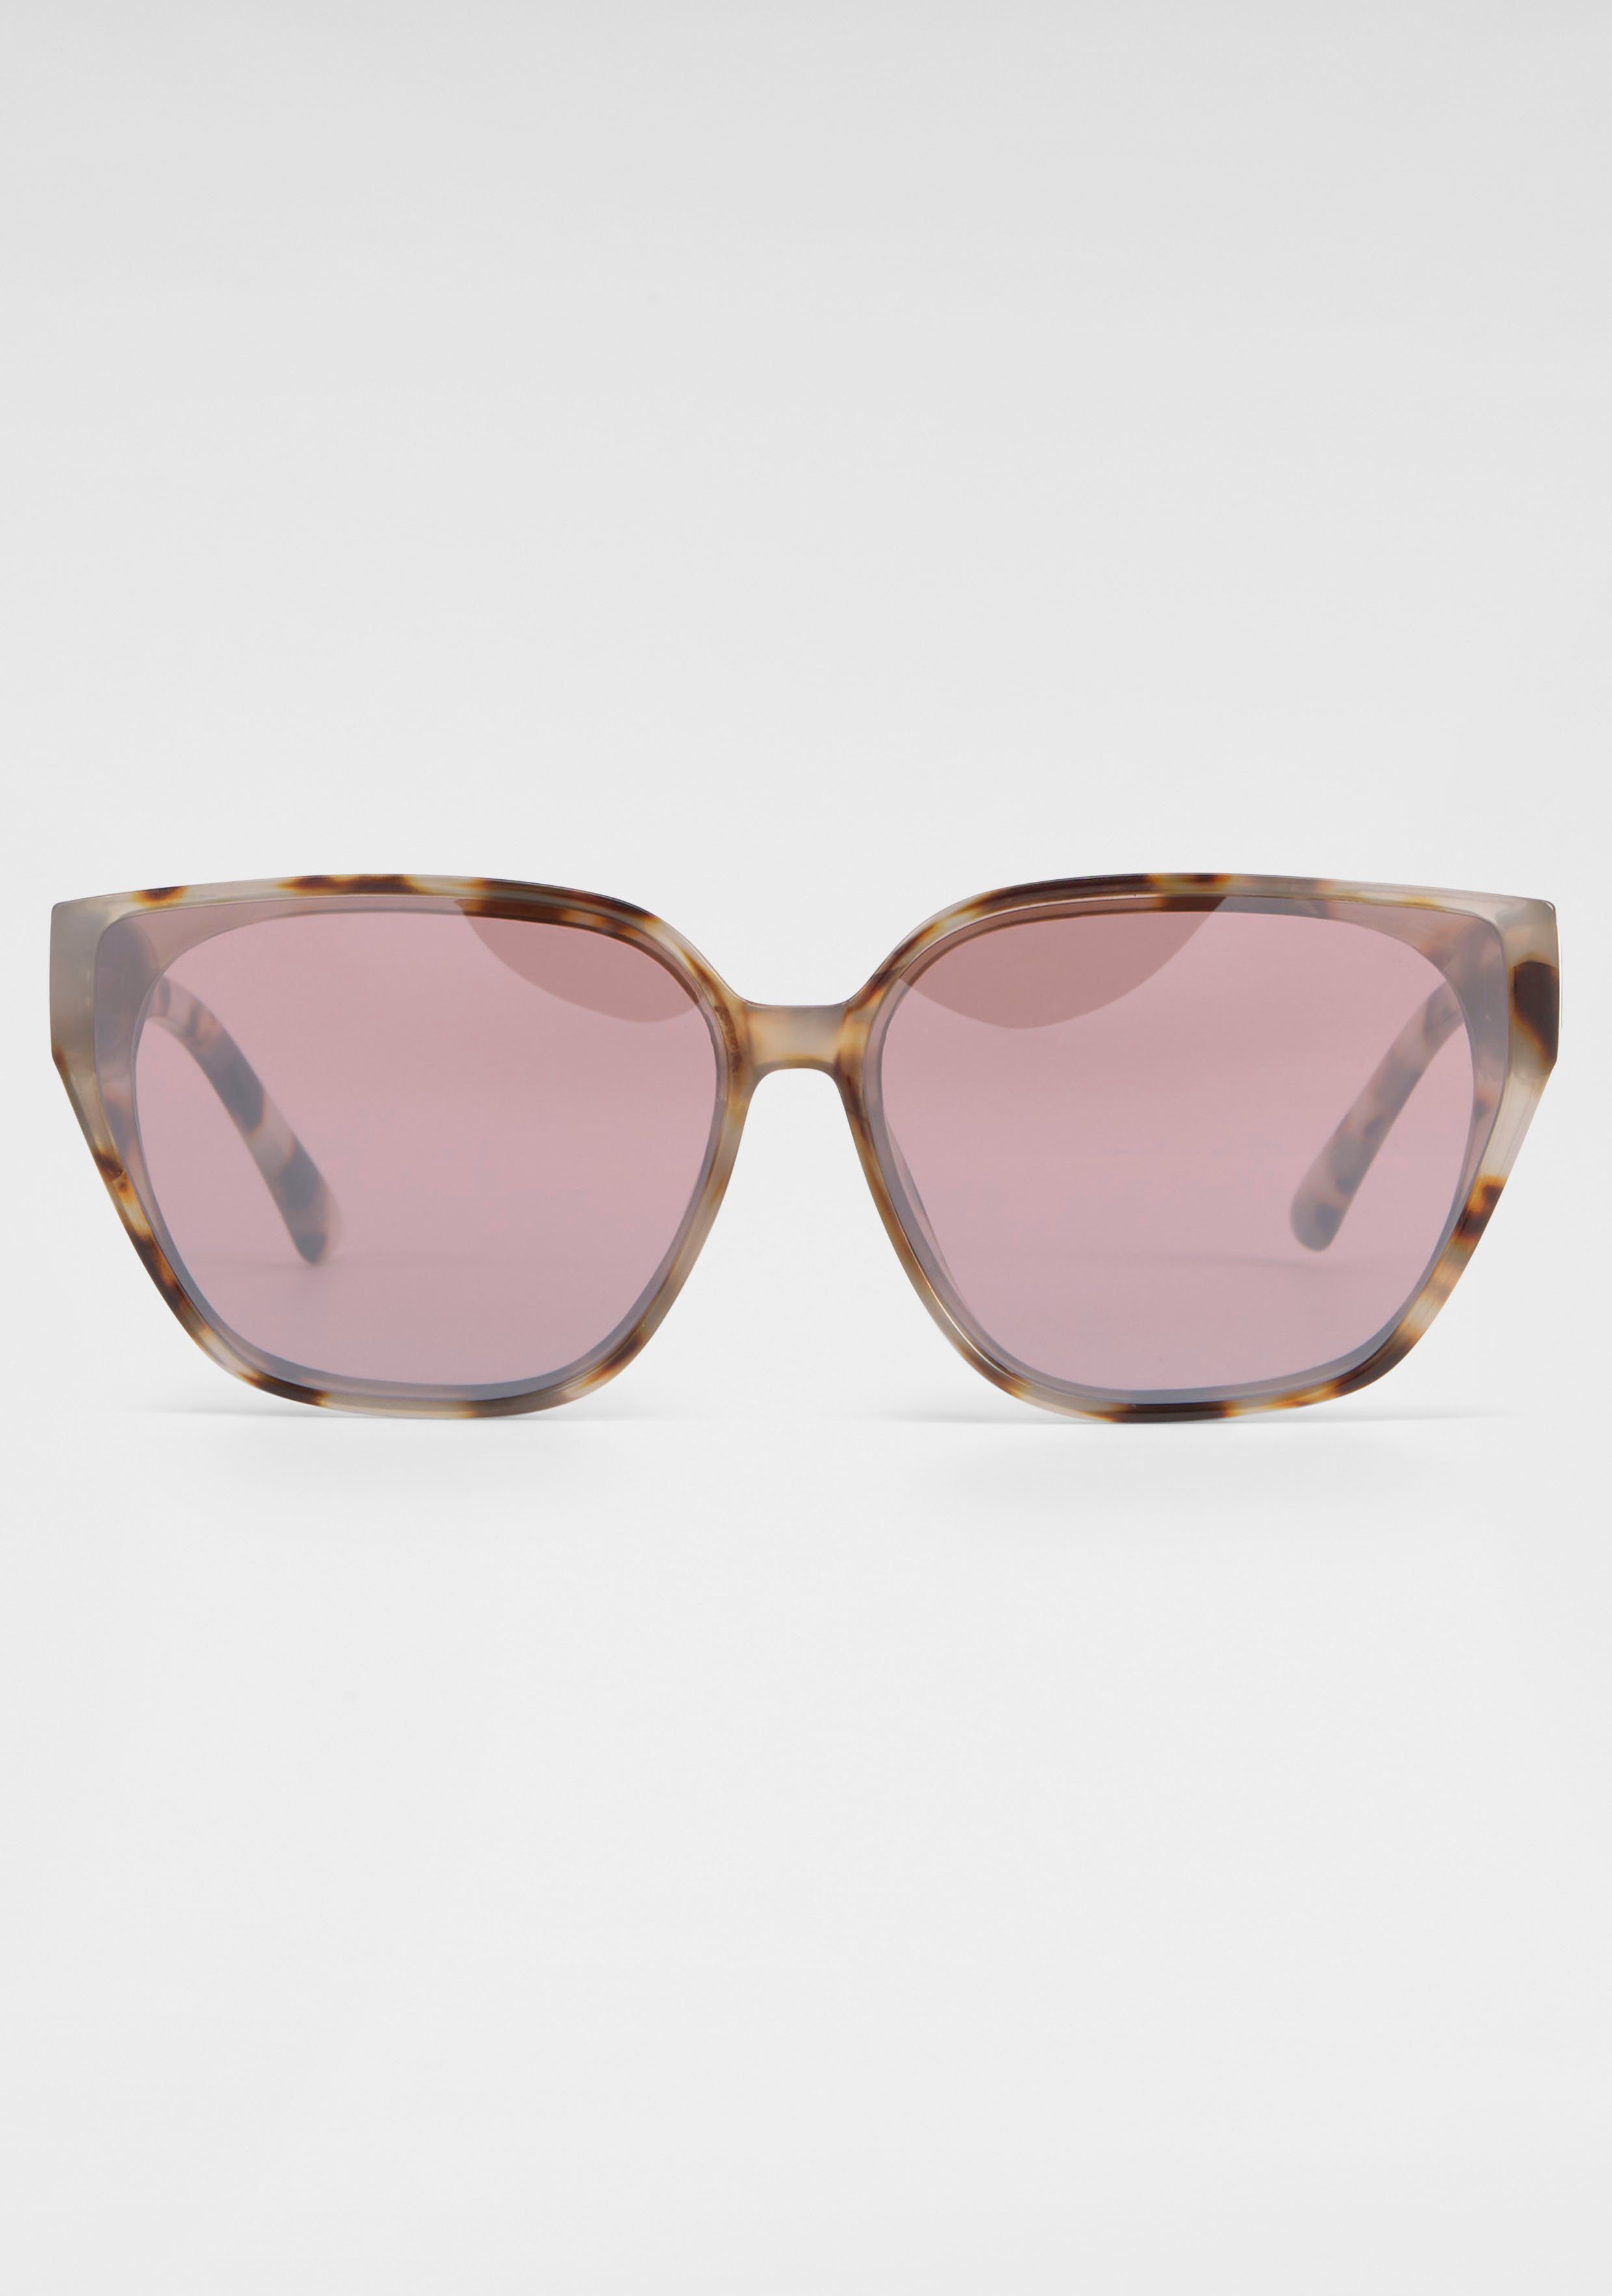 catwalk Eyewear Sonnenbrille Leo-Optik braun-natur